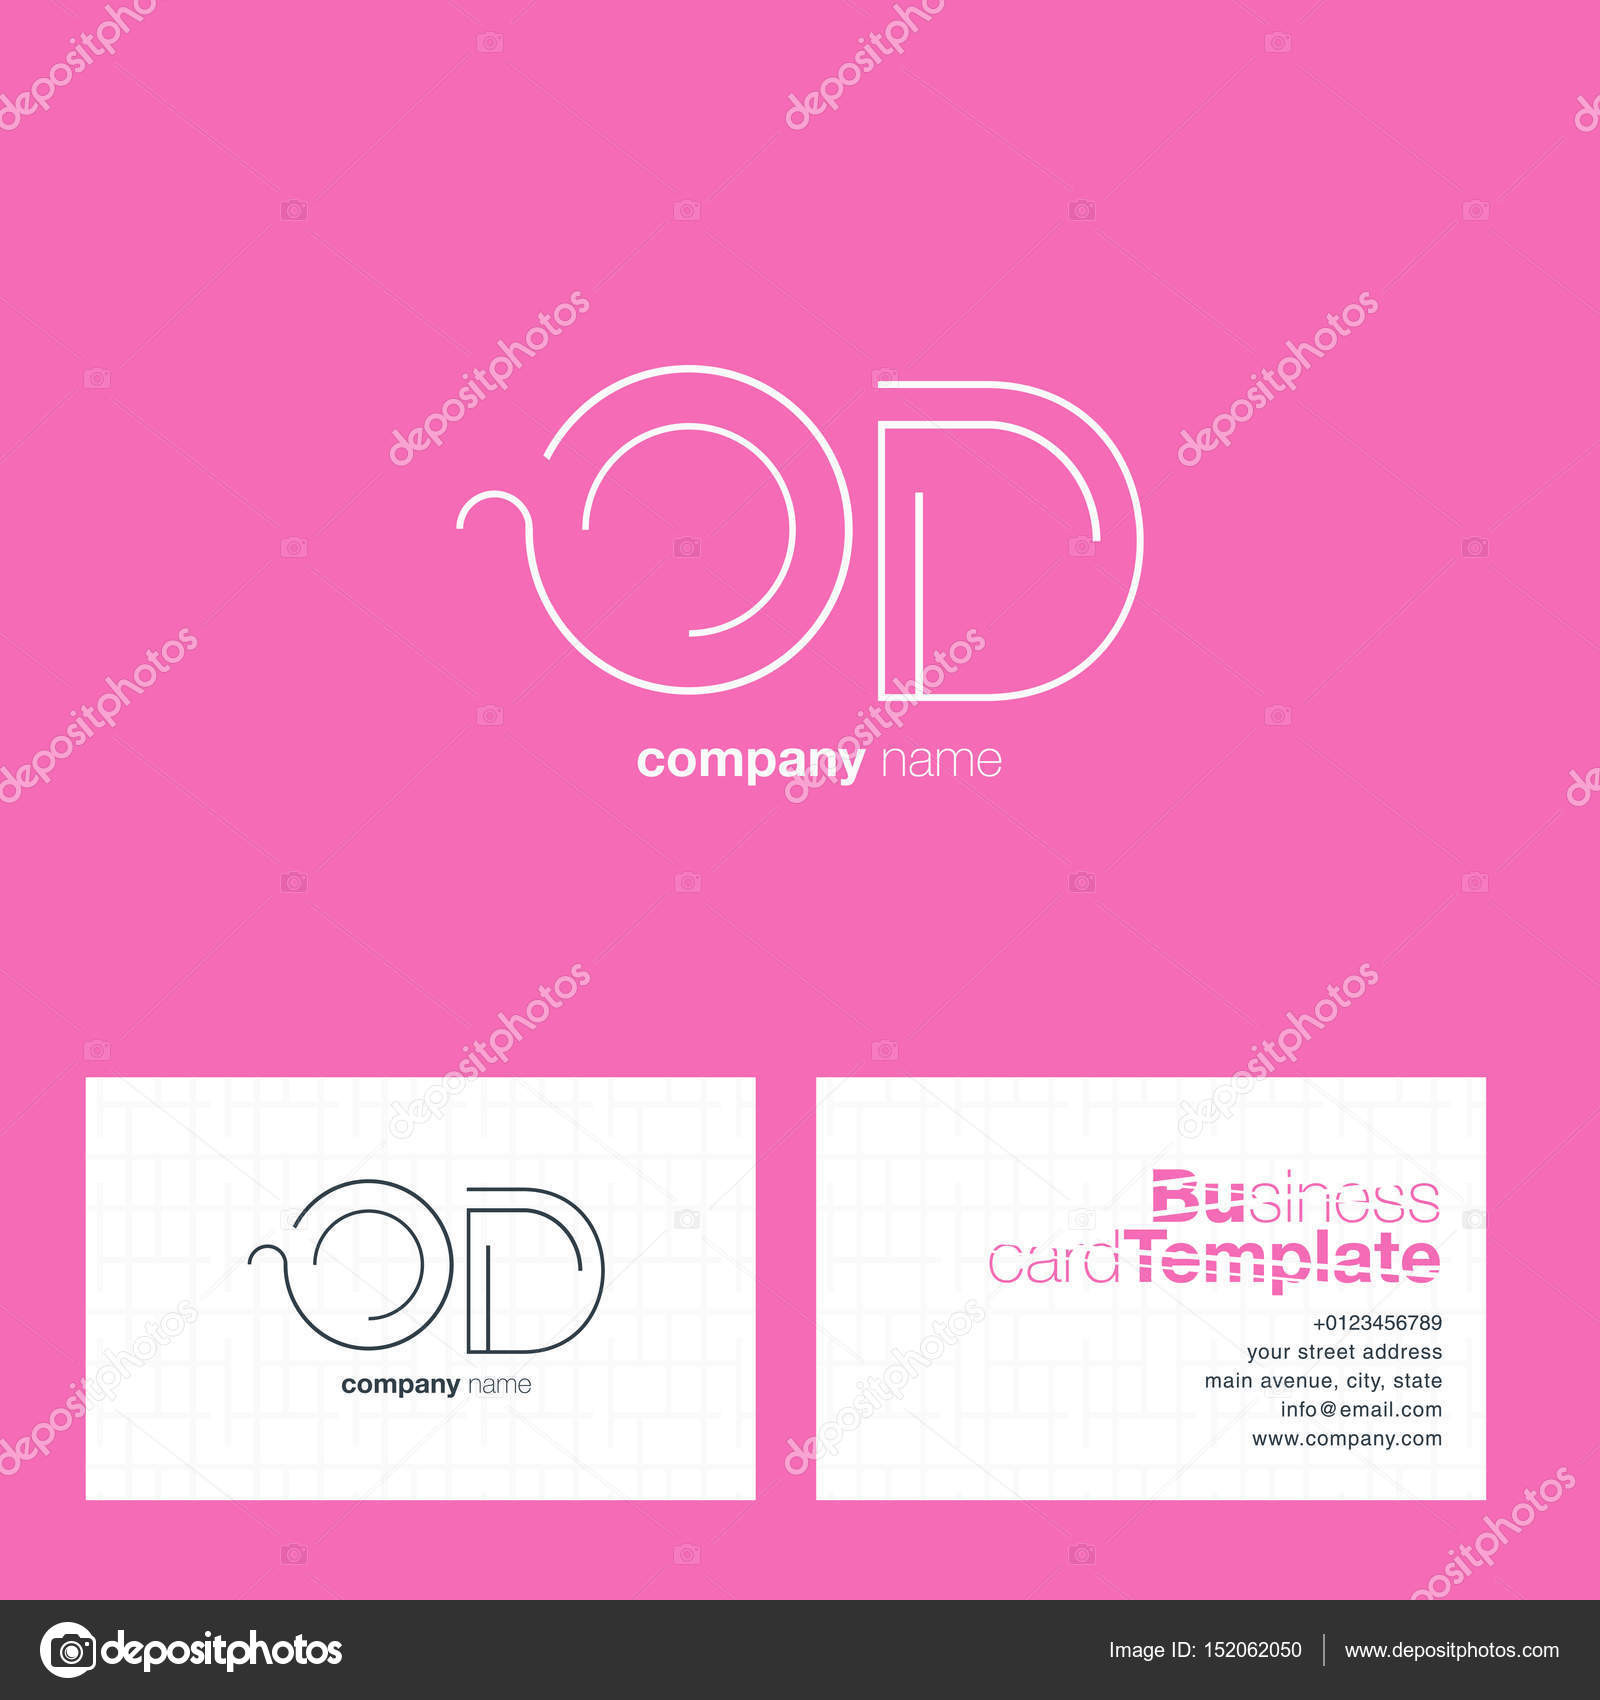 depositphotos stock illustration od letters logo business card